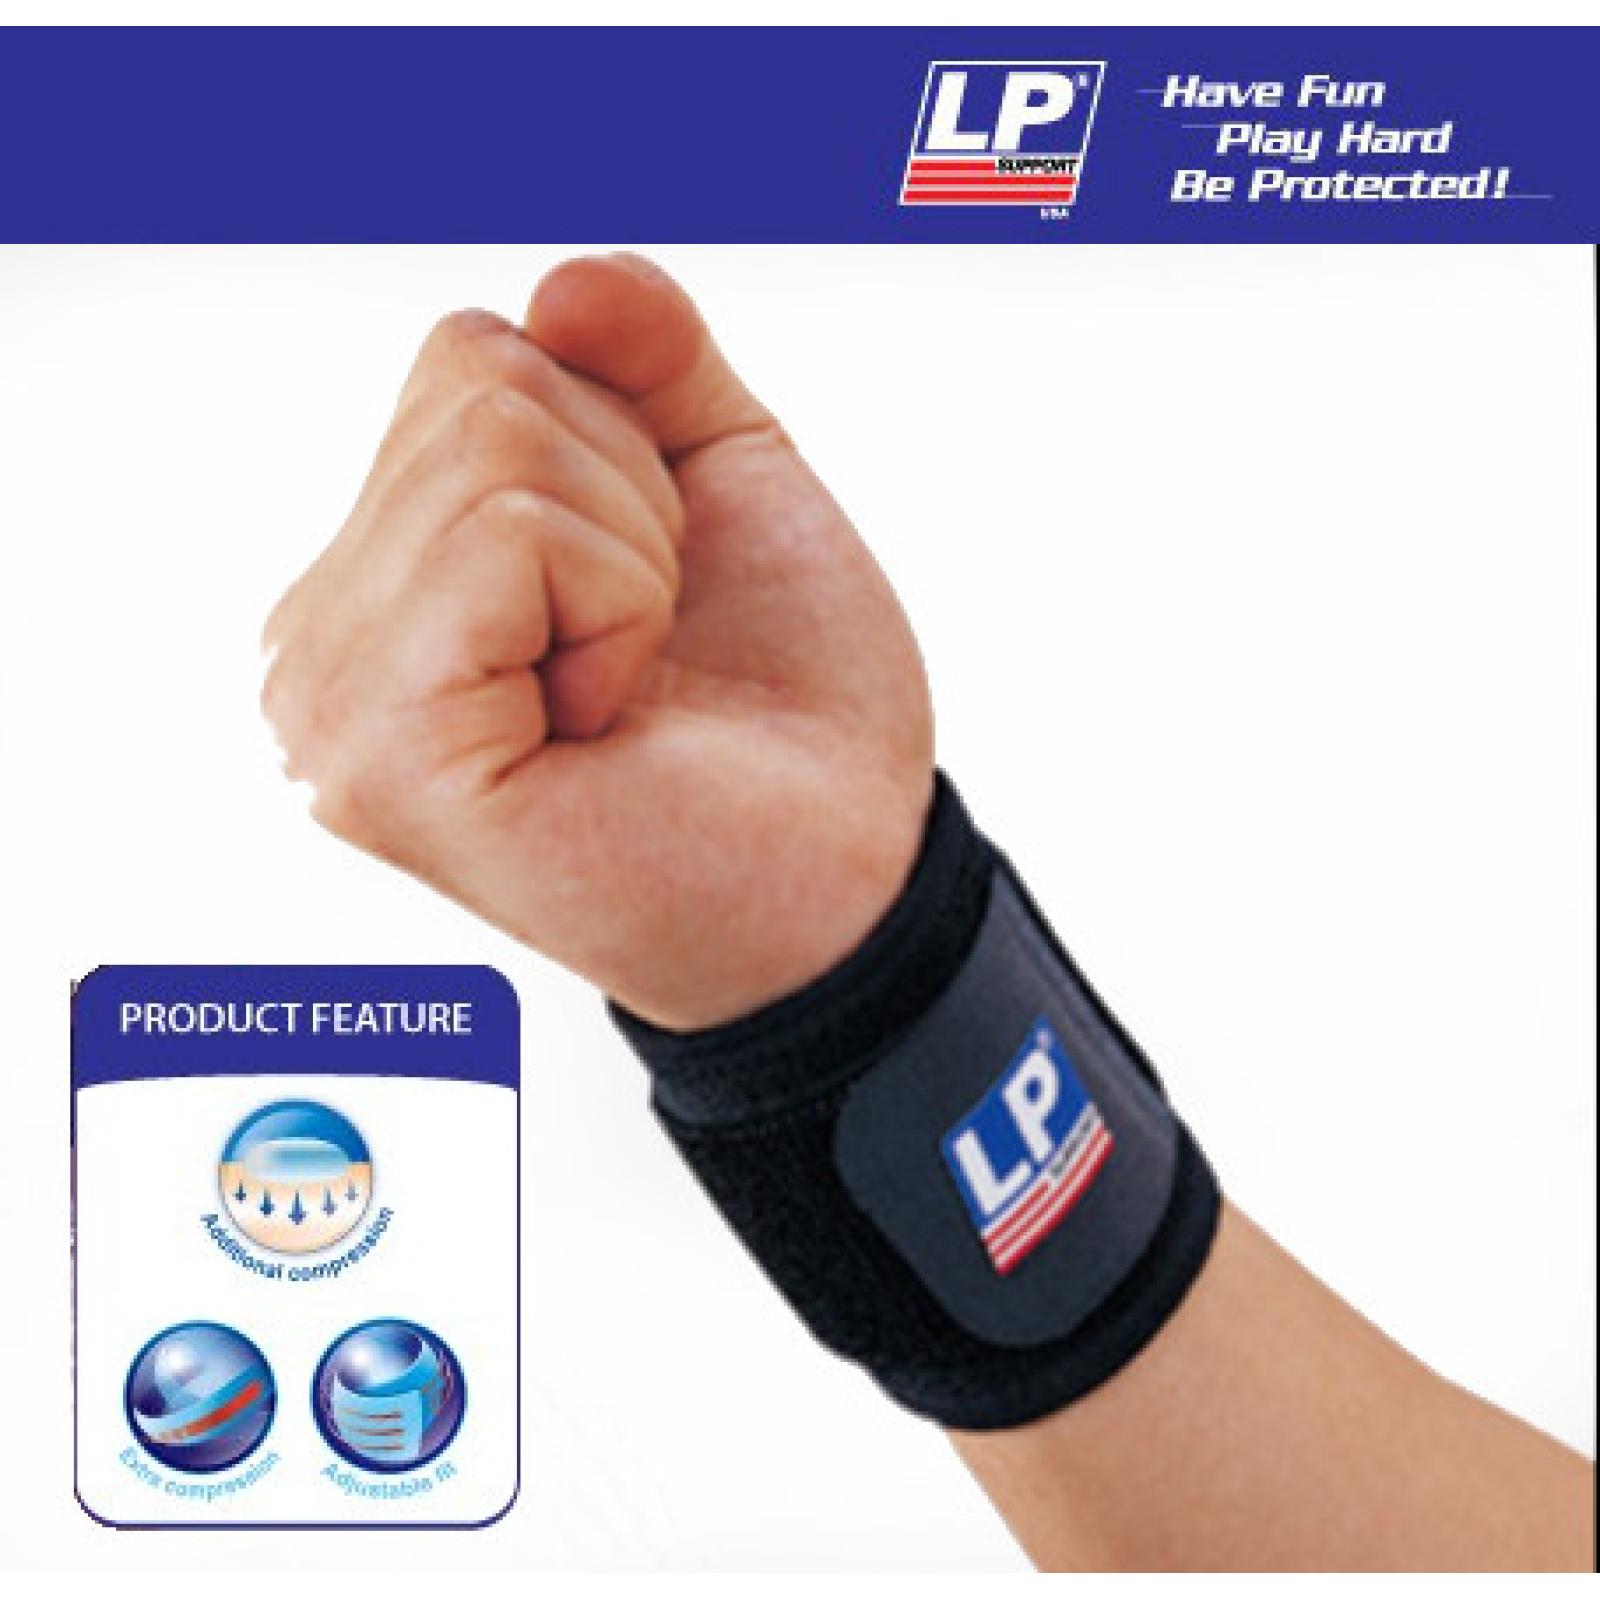 LP Extreme Wrist Support 